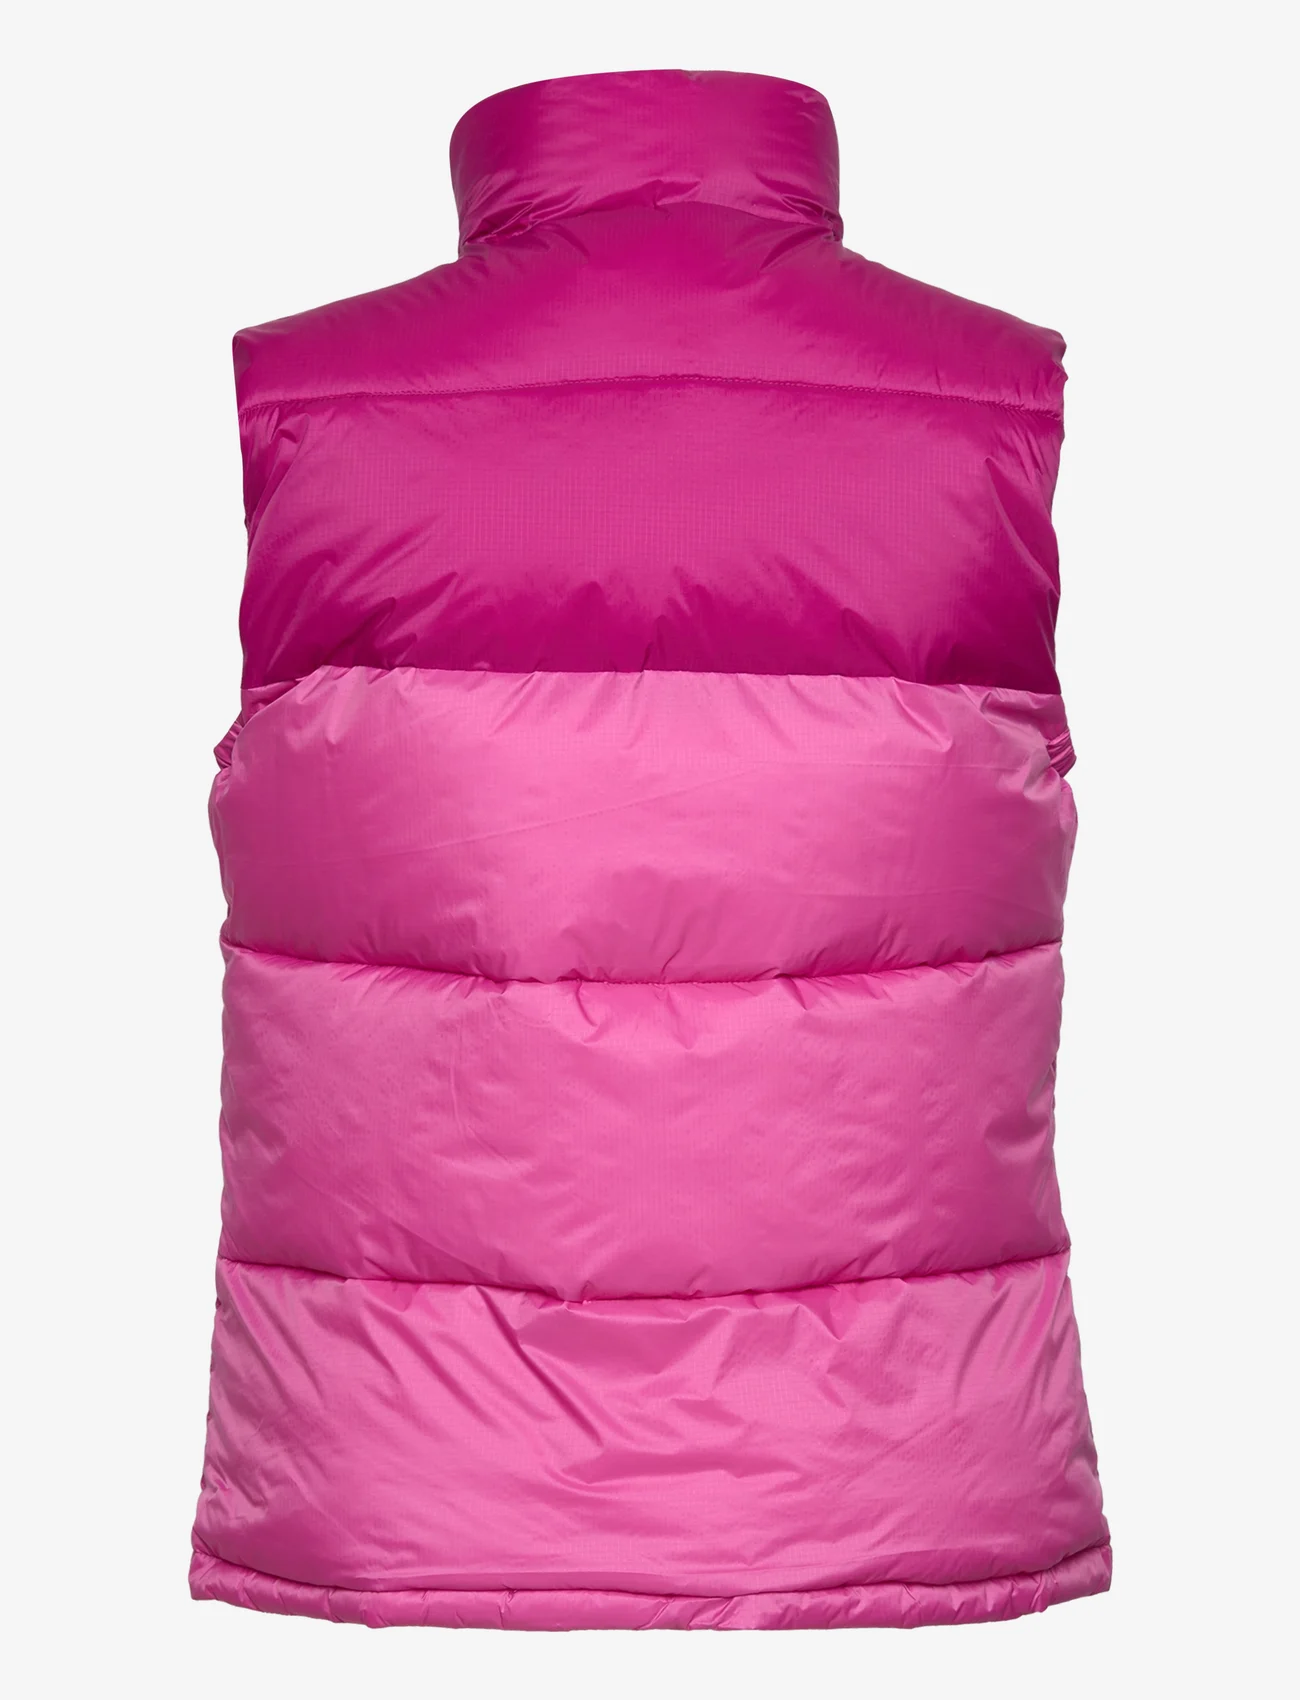 Champion - Polyfilled Vest - puffer vests - phlox pink - 1